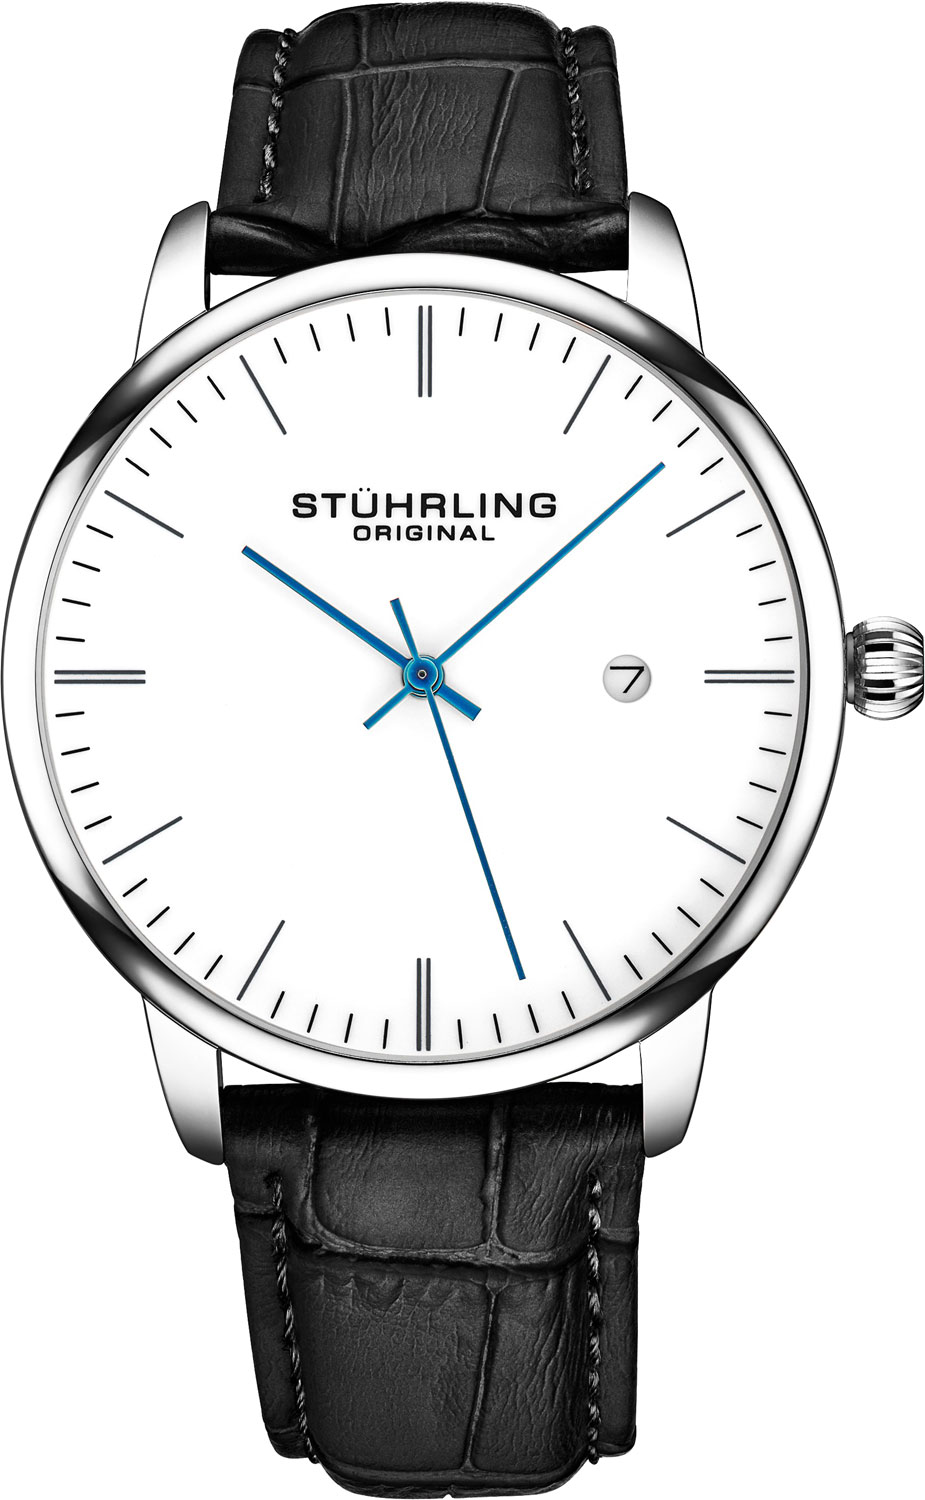   Stuhrling 3997.1